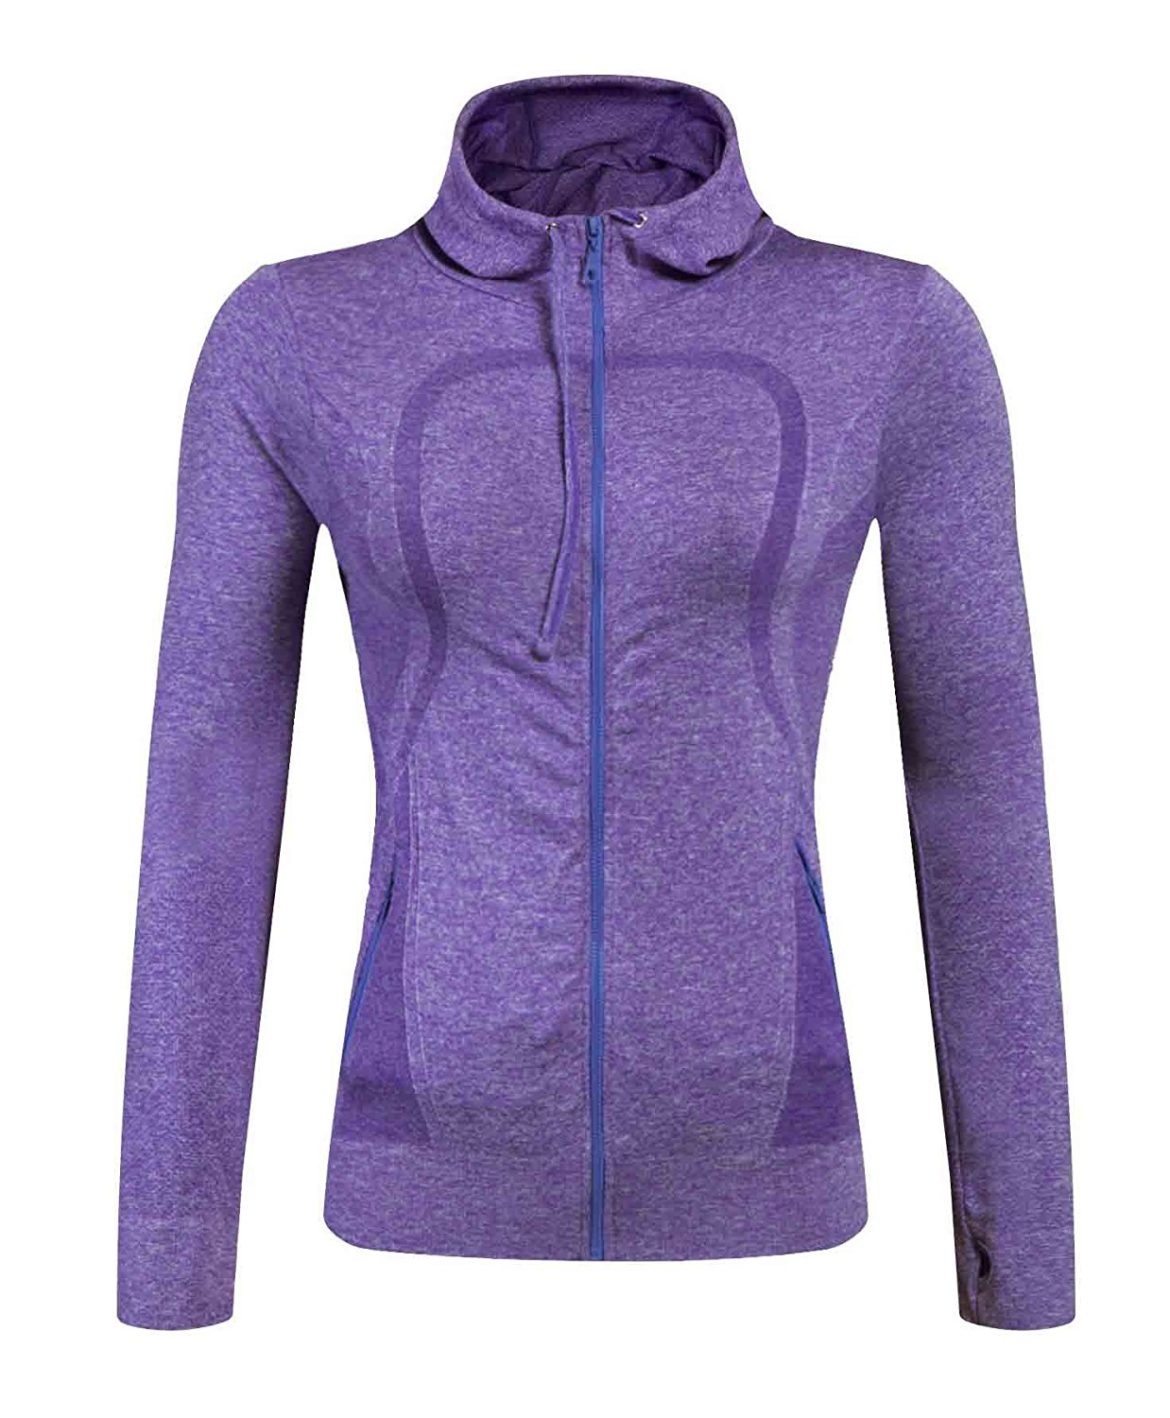 Selighting Women’s Running Sweatshirts Full Zip Hoodie Yoga Jackets ...